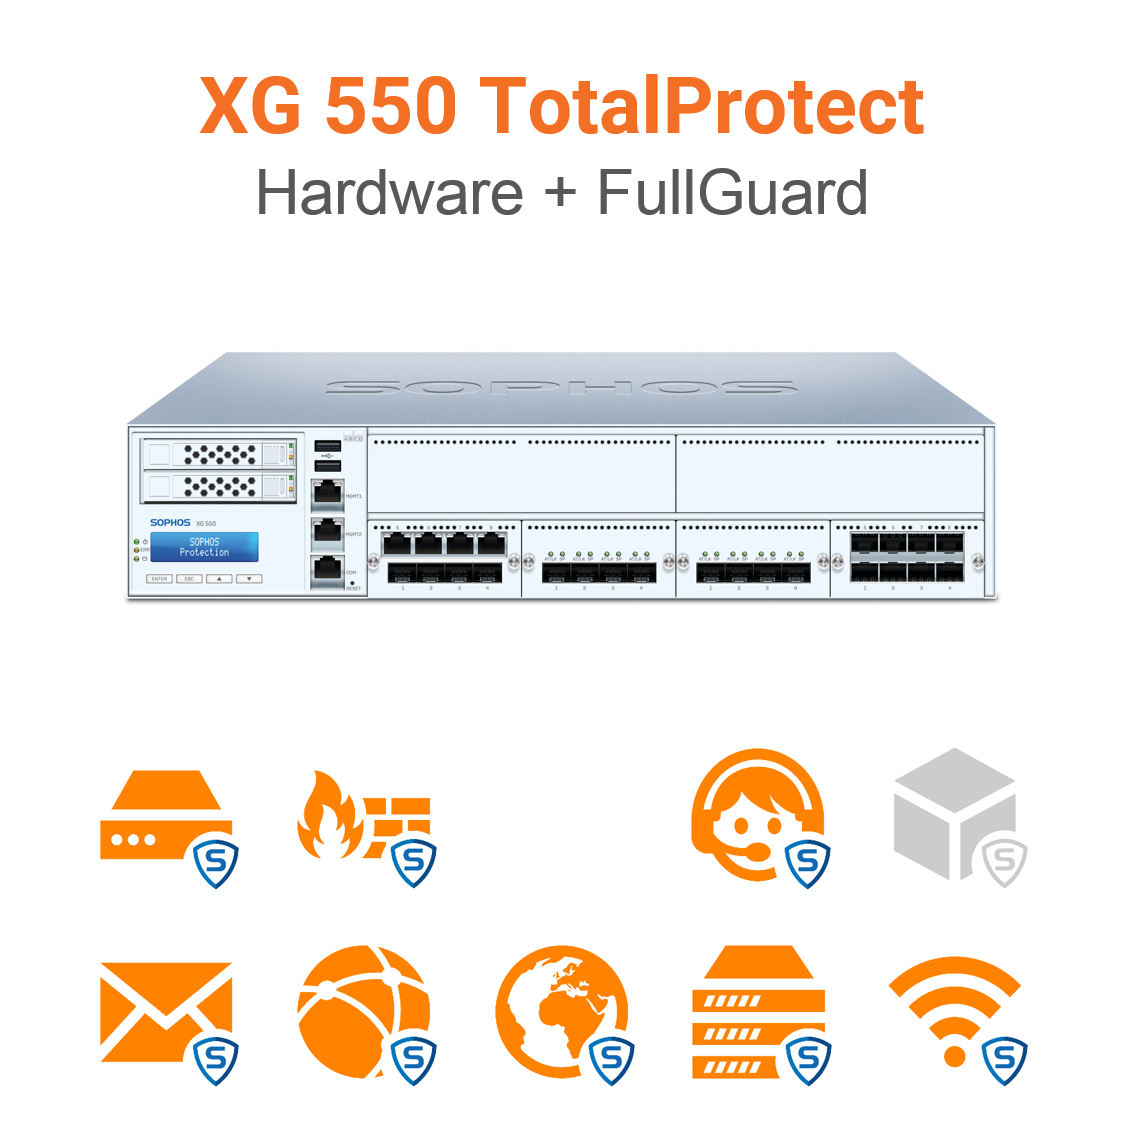 Sophos XG 550 TotalProtect Bundle (Hardware + Lizenz)